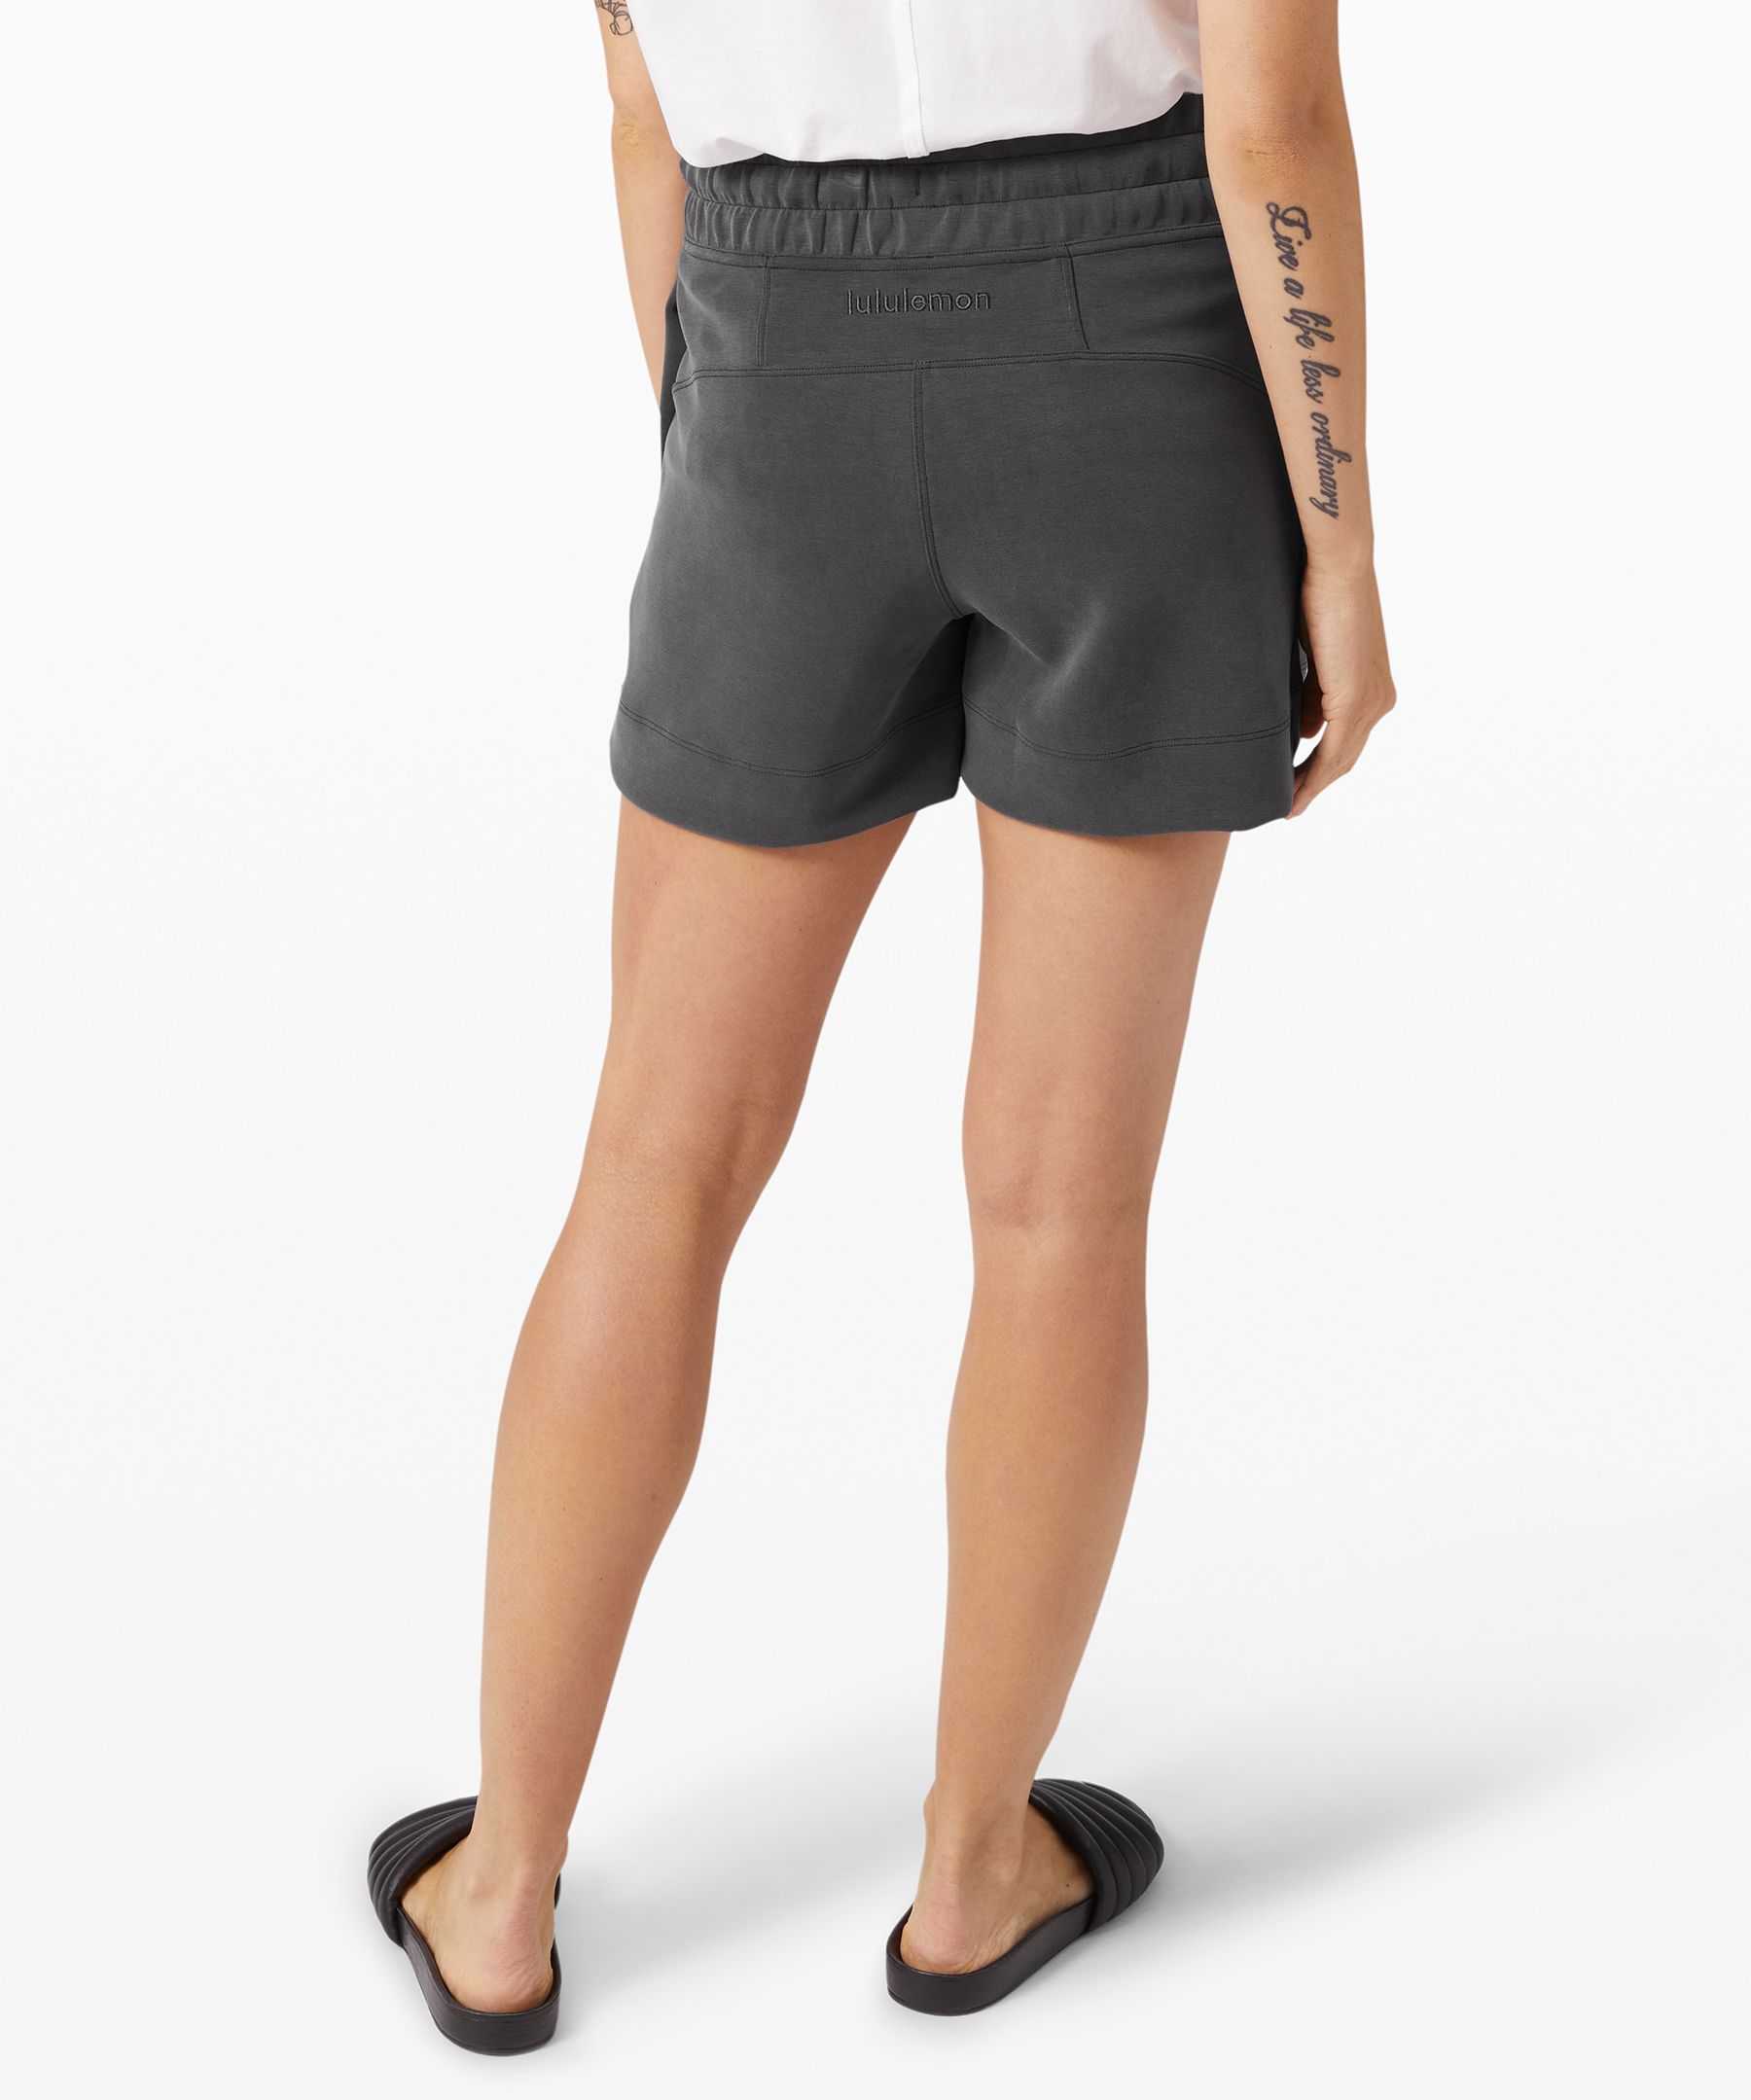 women's shorts lululemon